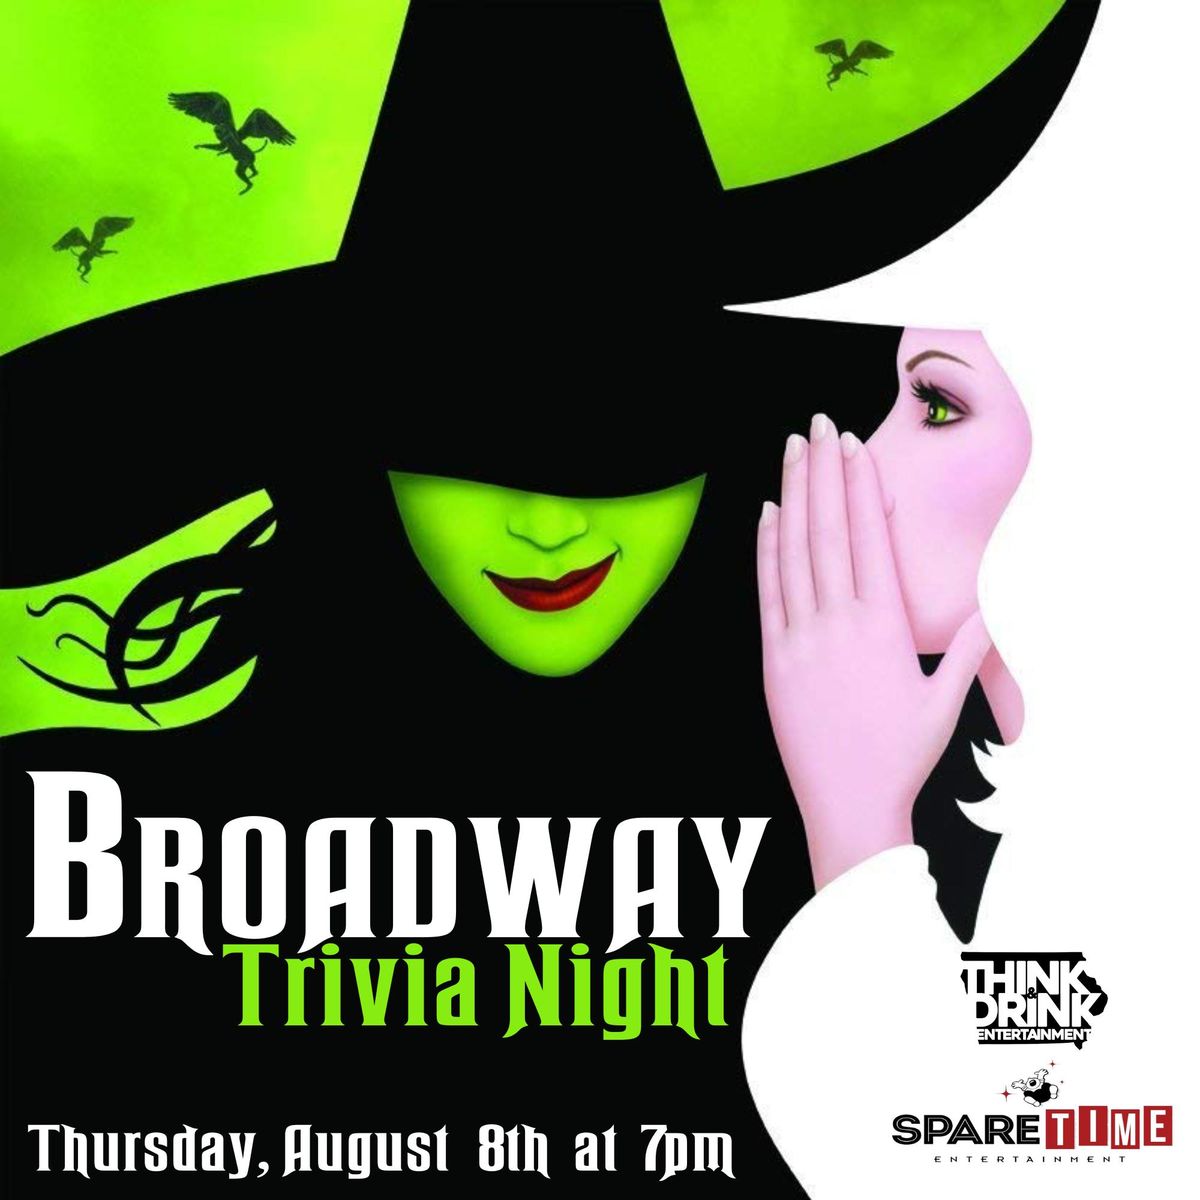 Broadway Trivia Night @ Spare Time Cedar Rapids, IA) \/ Thursday, August 8th @ 7pm